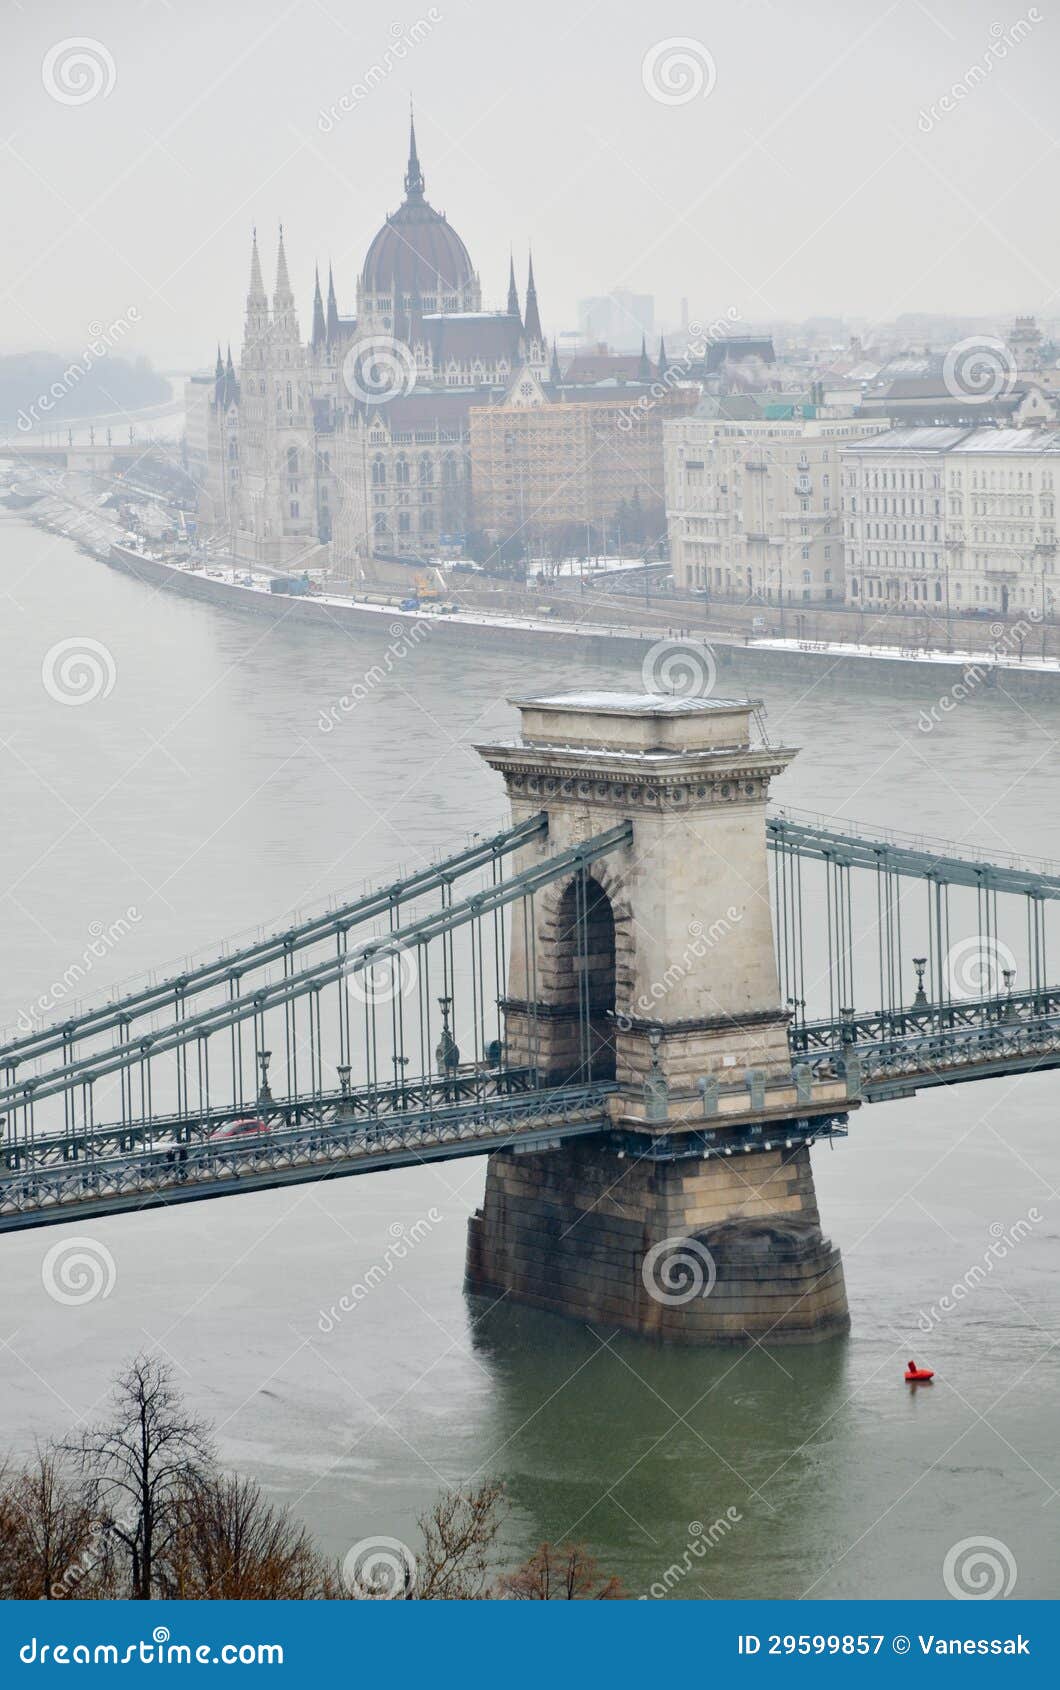 the chain bridge in budapest